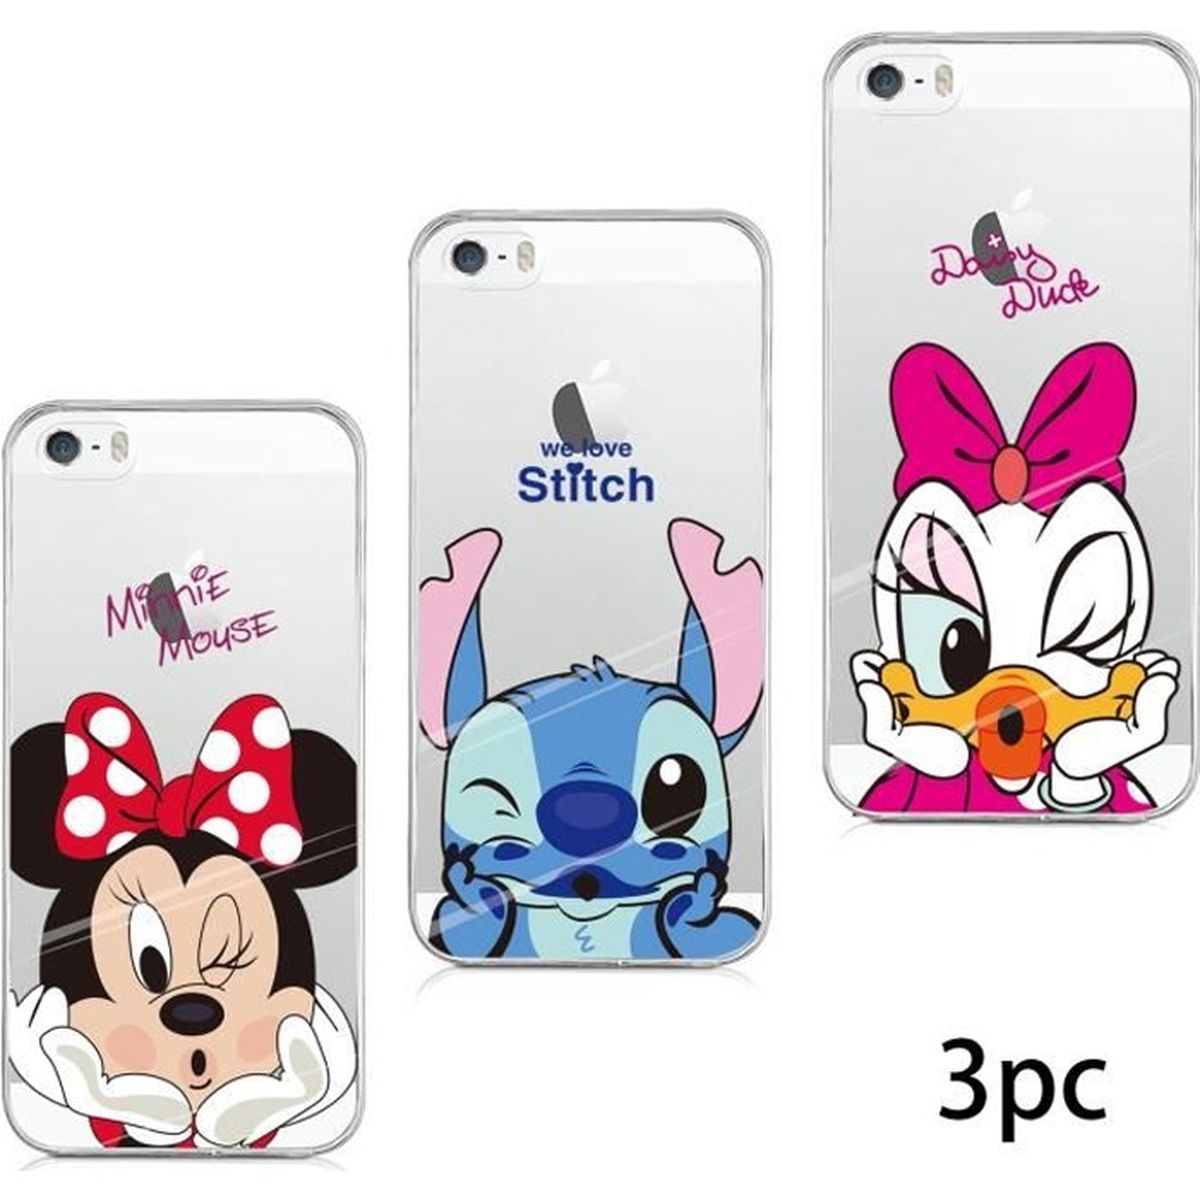 Coque Pour Apple iPhone 5 5S SE 3PC Disney Minnie Schéma Souple Premium TPU Gel Silicone